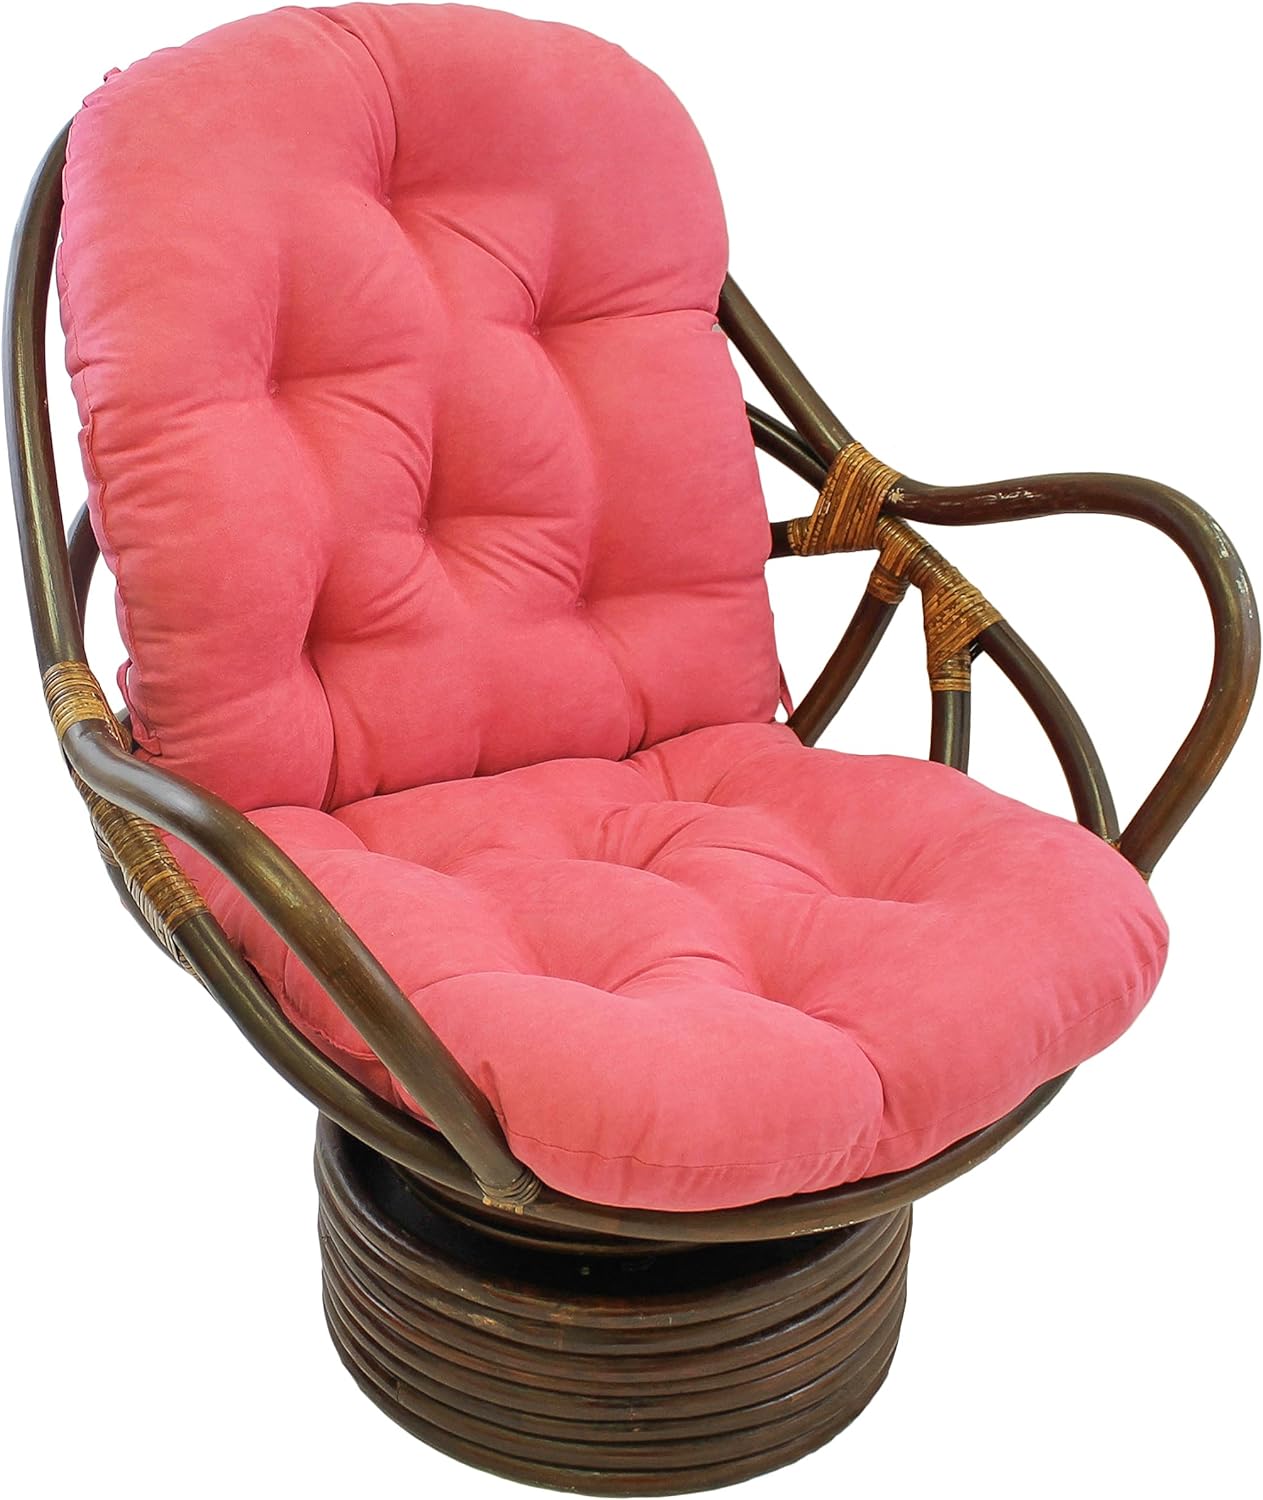 Blazing Needles Solid Microsuede Swivel Rocker Chair Cushion, 48" x 24", Berry Berry